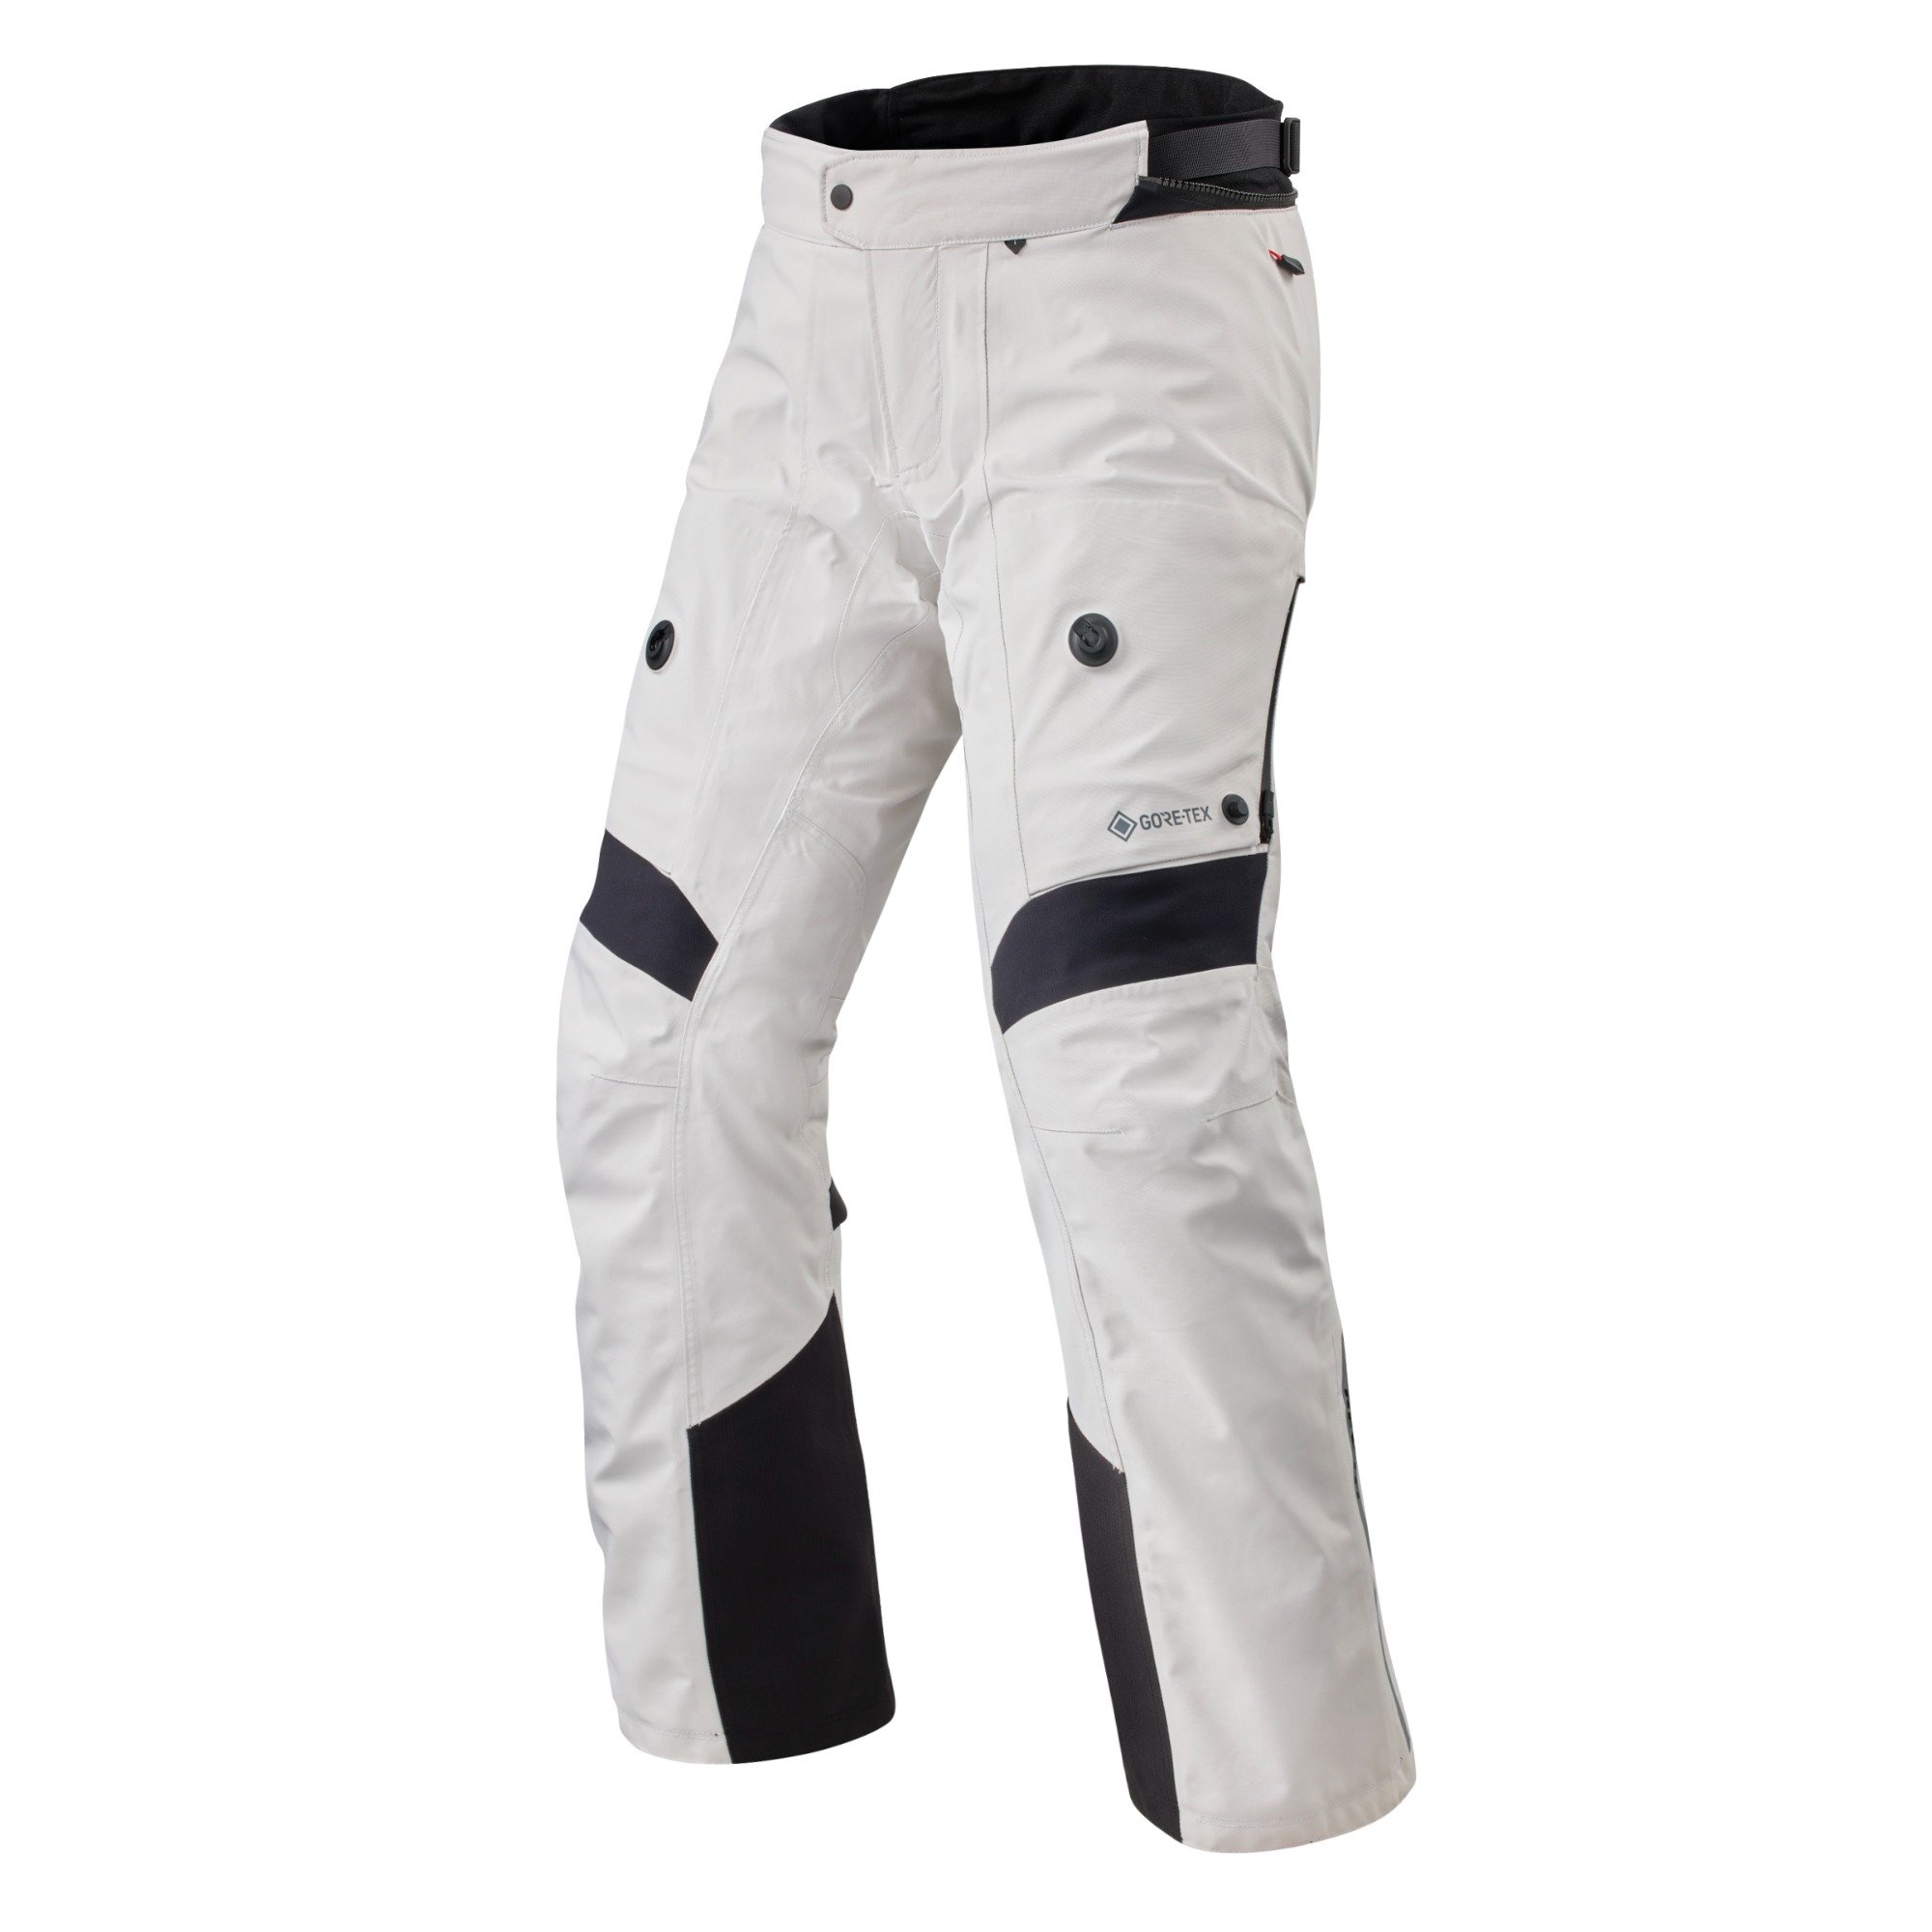 Image of REV'IT! Pants Poseidon 3 GTX Silver Black Long Motorcycle Pants Talla XL